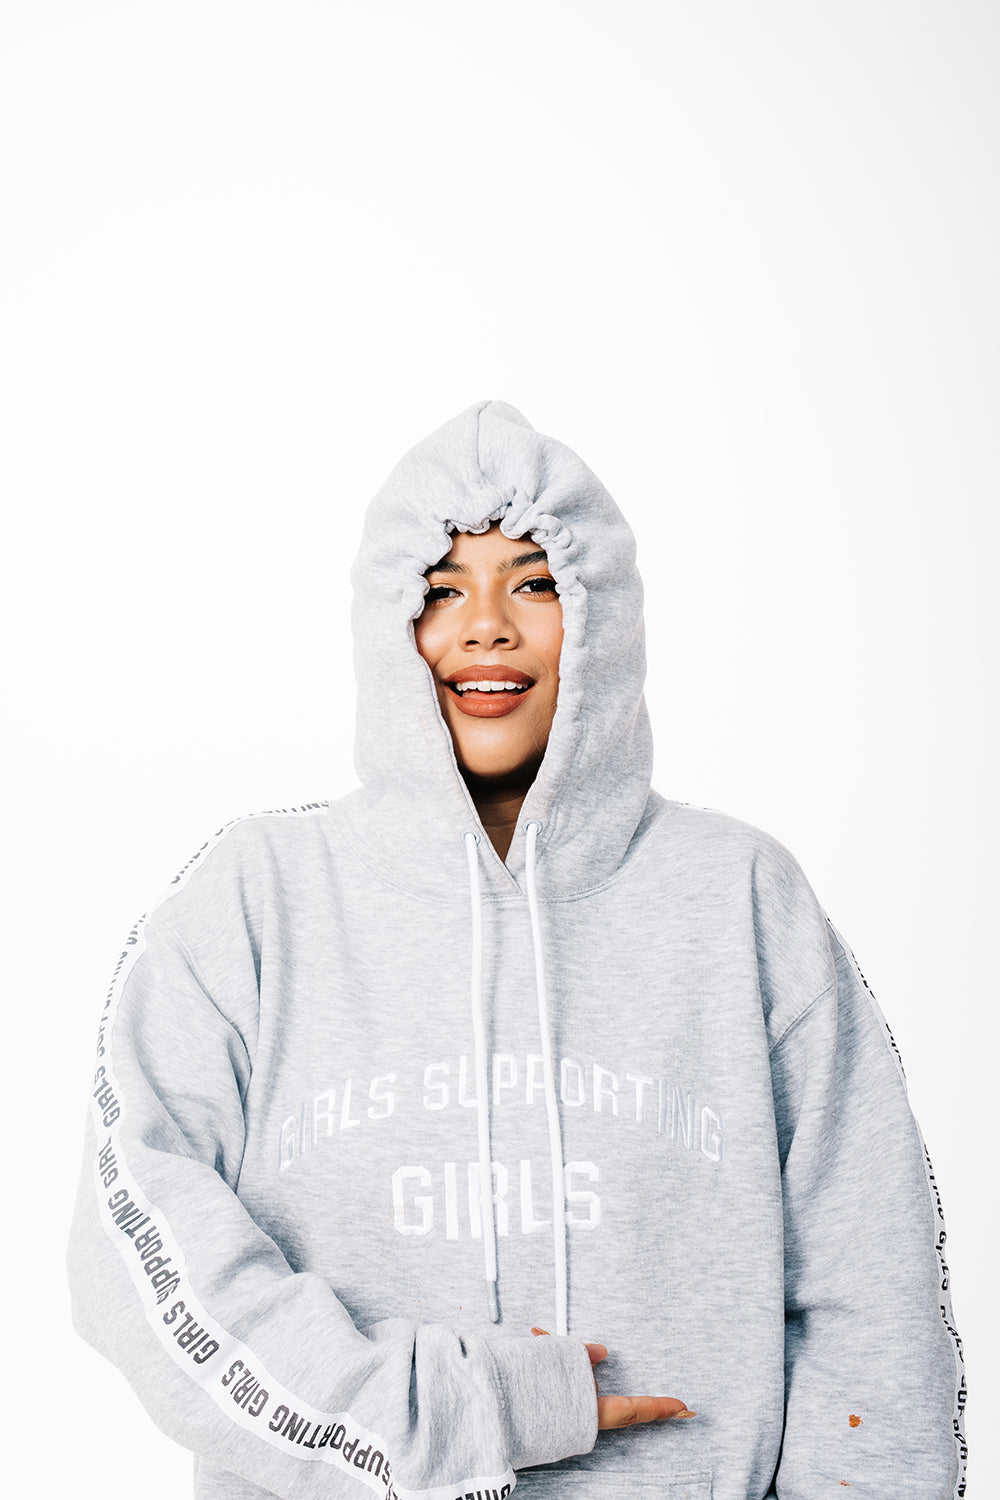 adelaine morin girls supporting girls hoodie